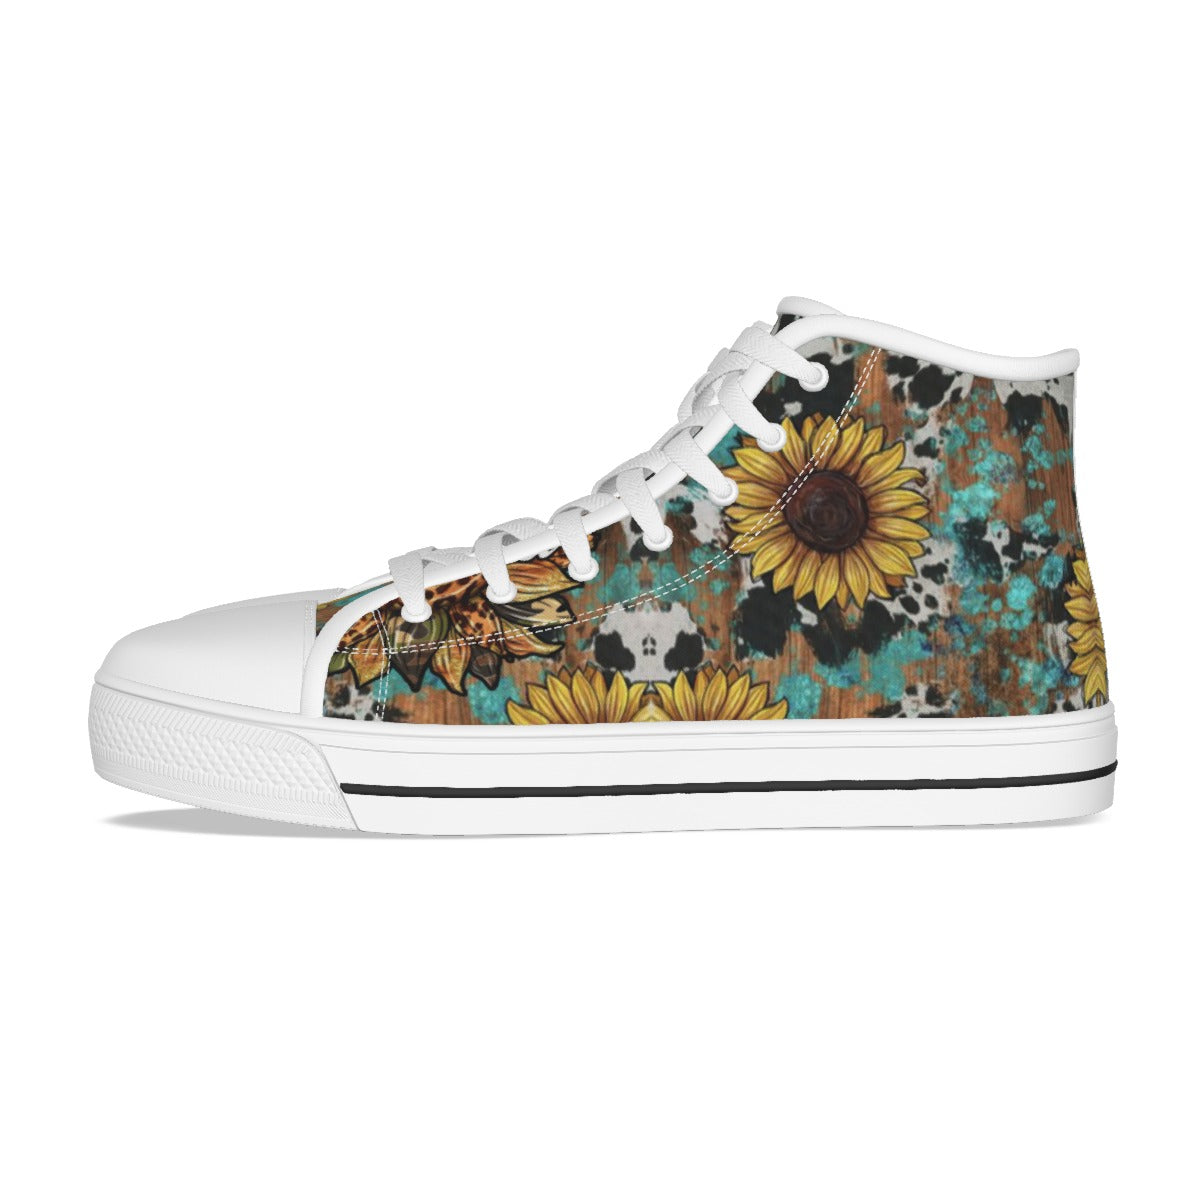 Personalized Flower Women's Canvas Shoes, Sunflower Shoes, Cowboy Shoes, Custom Nickname Shoes.